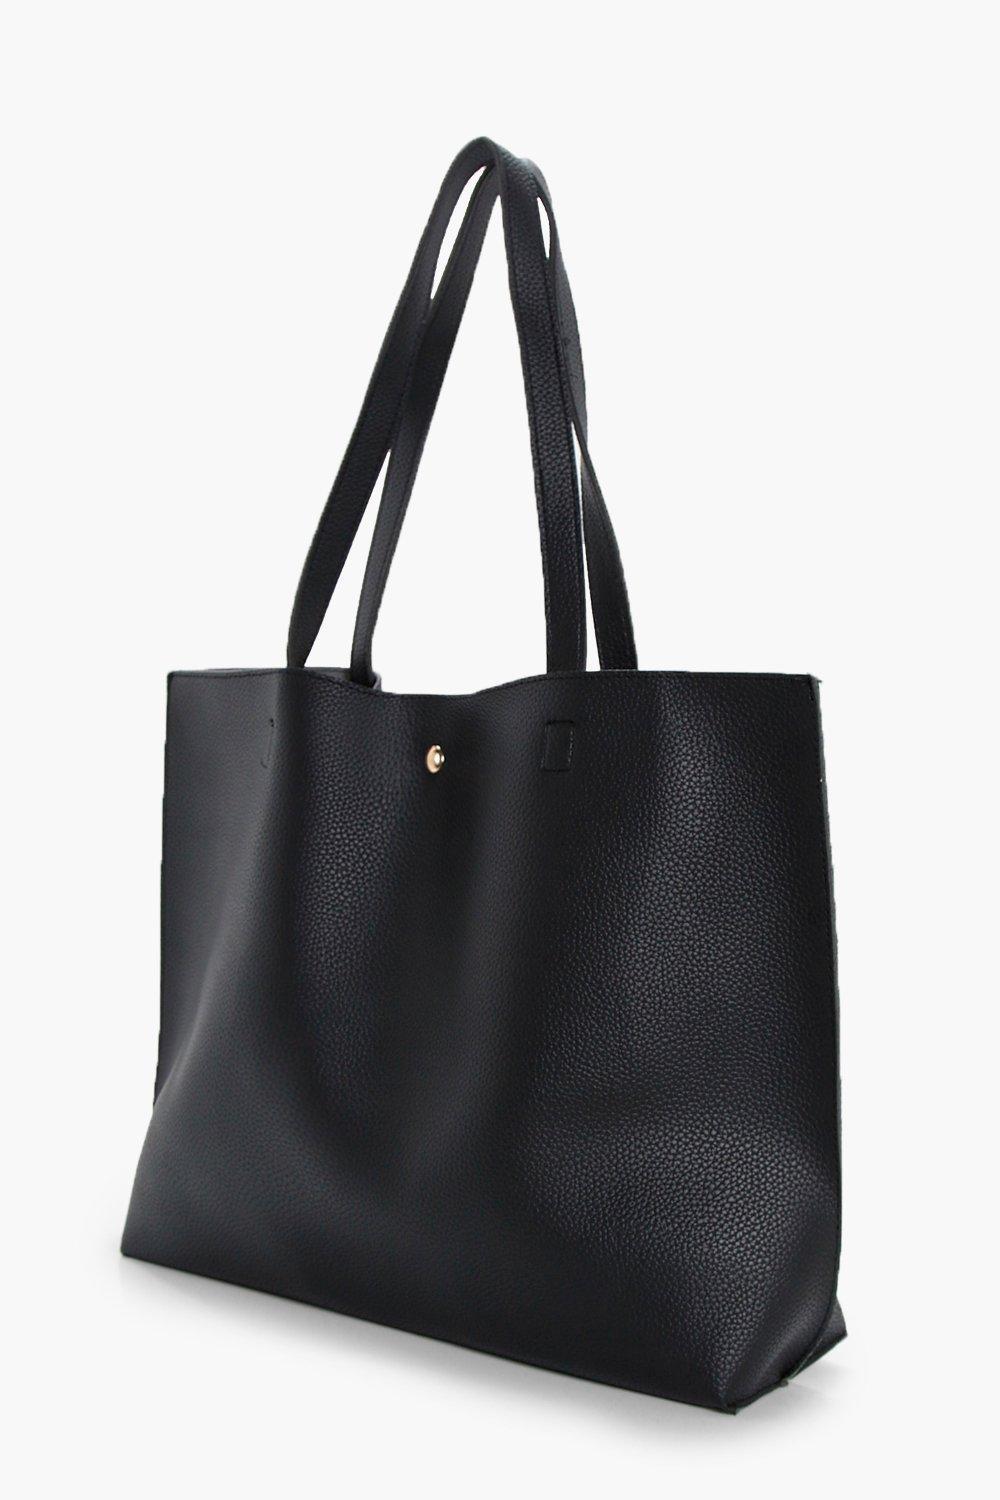 Boohoo Large Popper Tote Shopper Bag in Black | Lyst